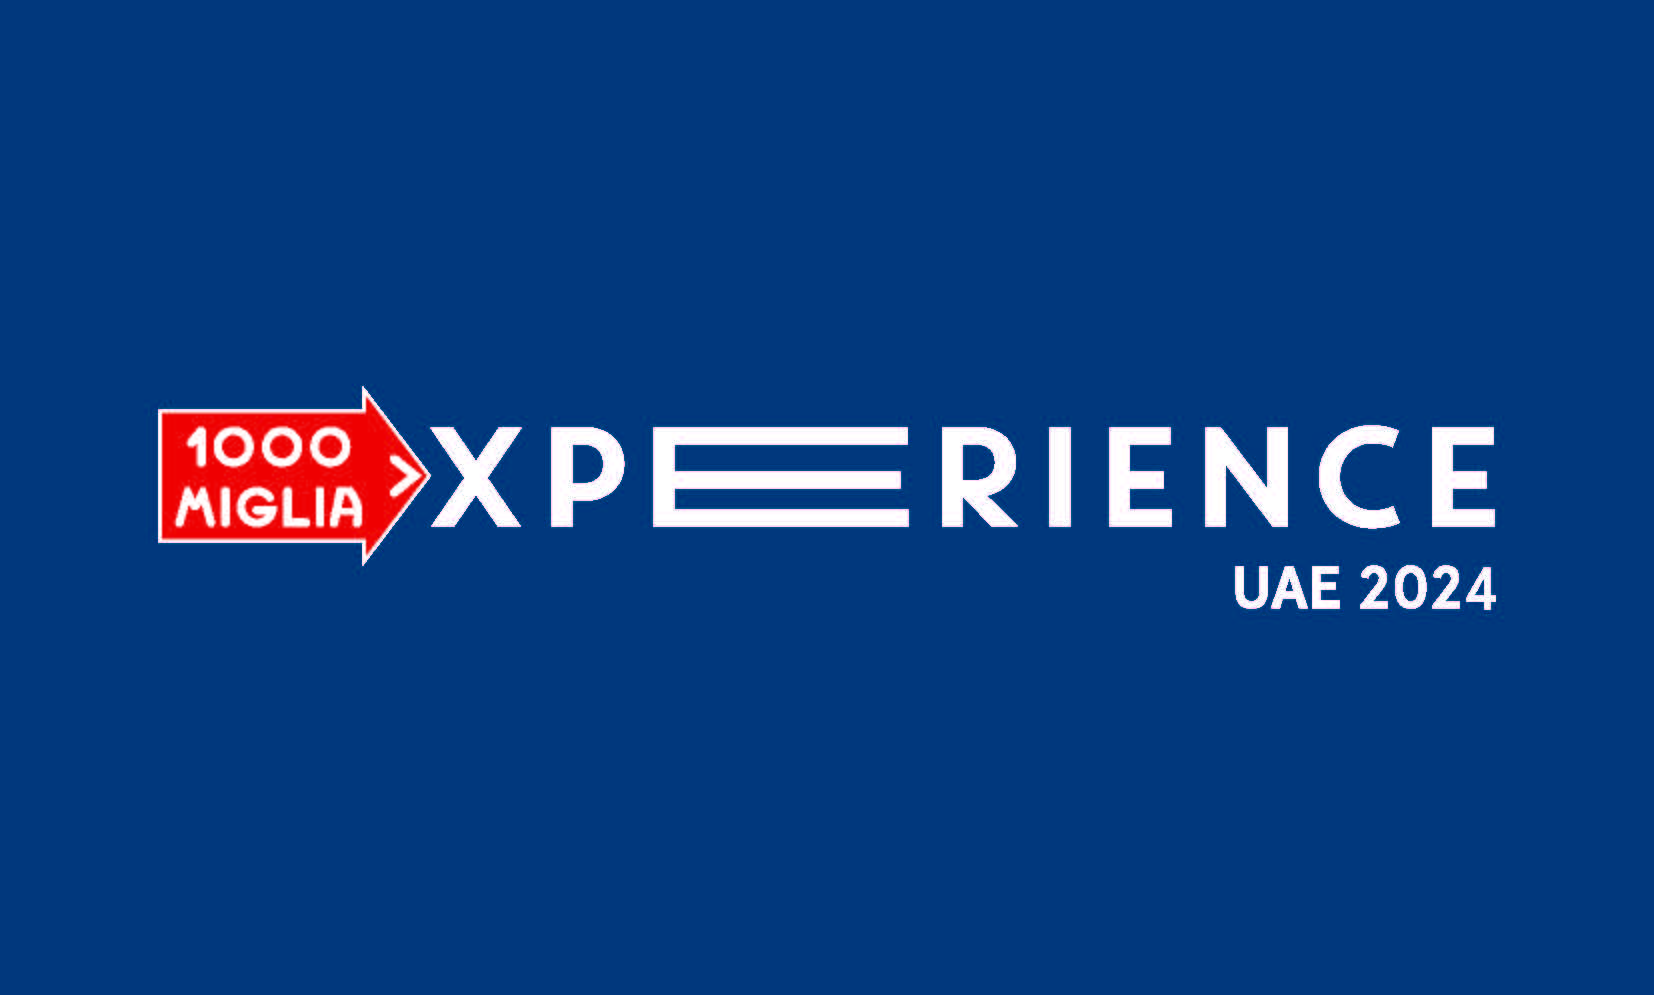 1000 Miglia Experience UAE